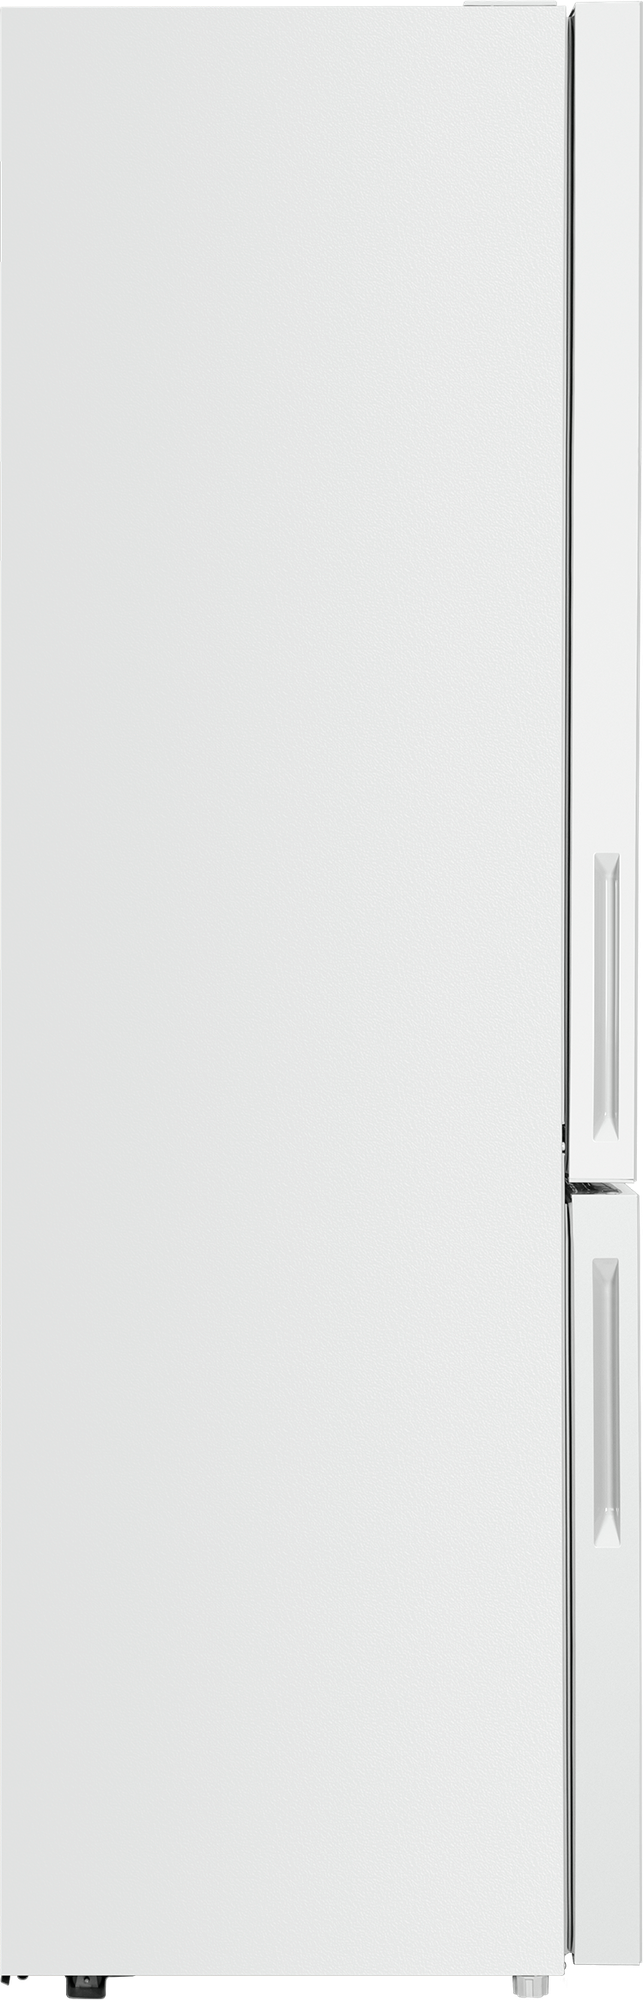 Холодильник Maunfeld - фото №6